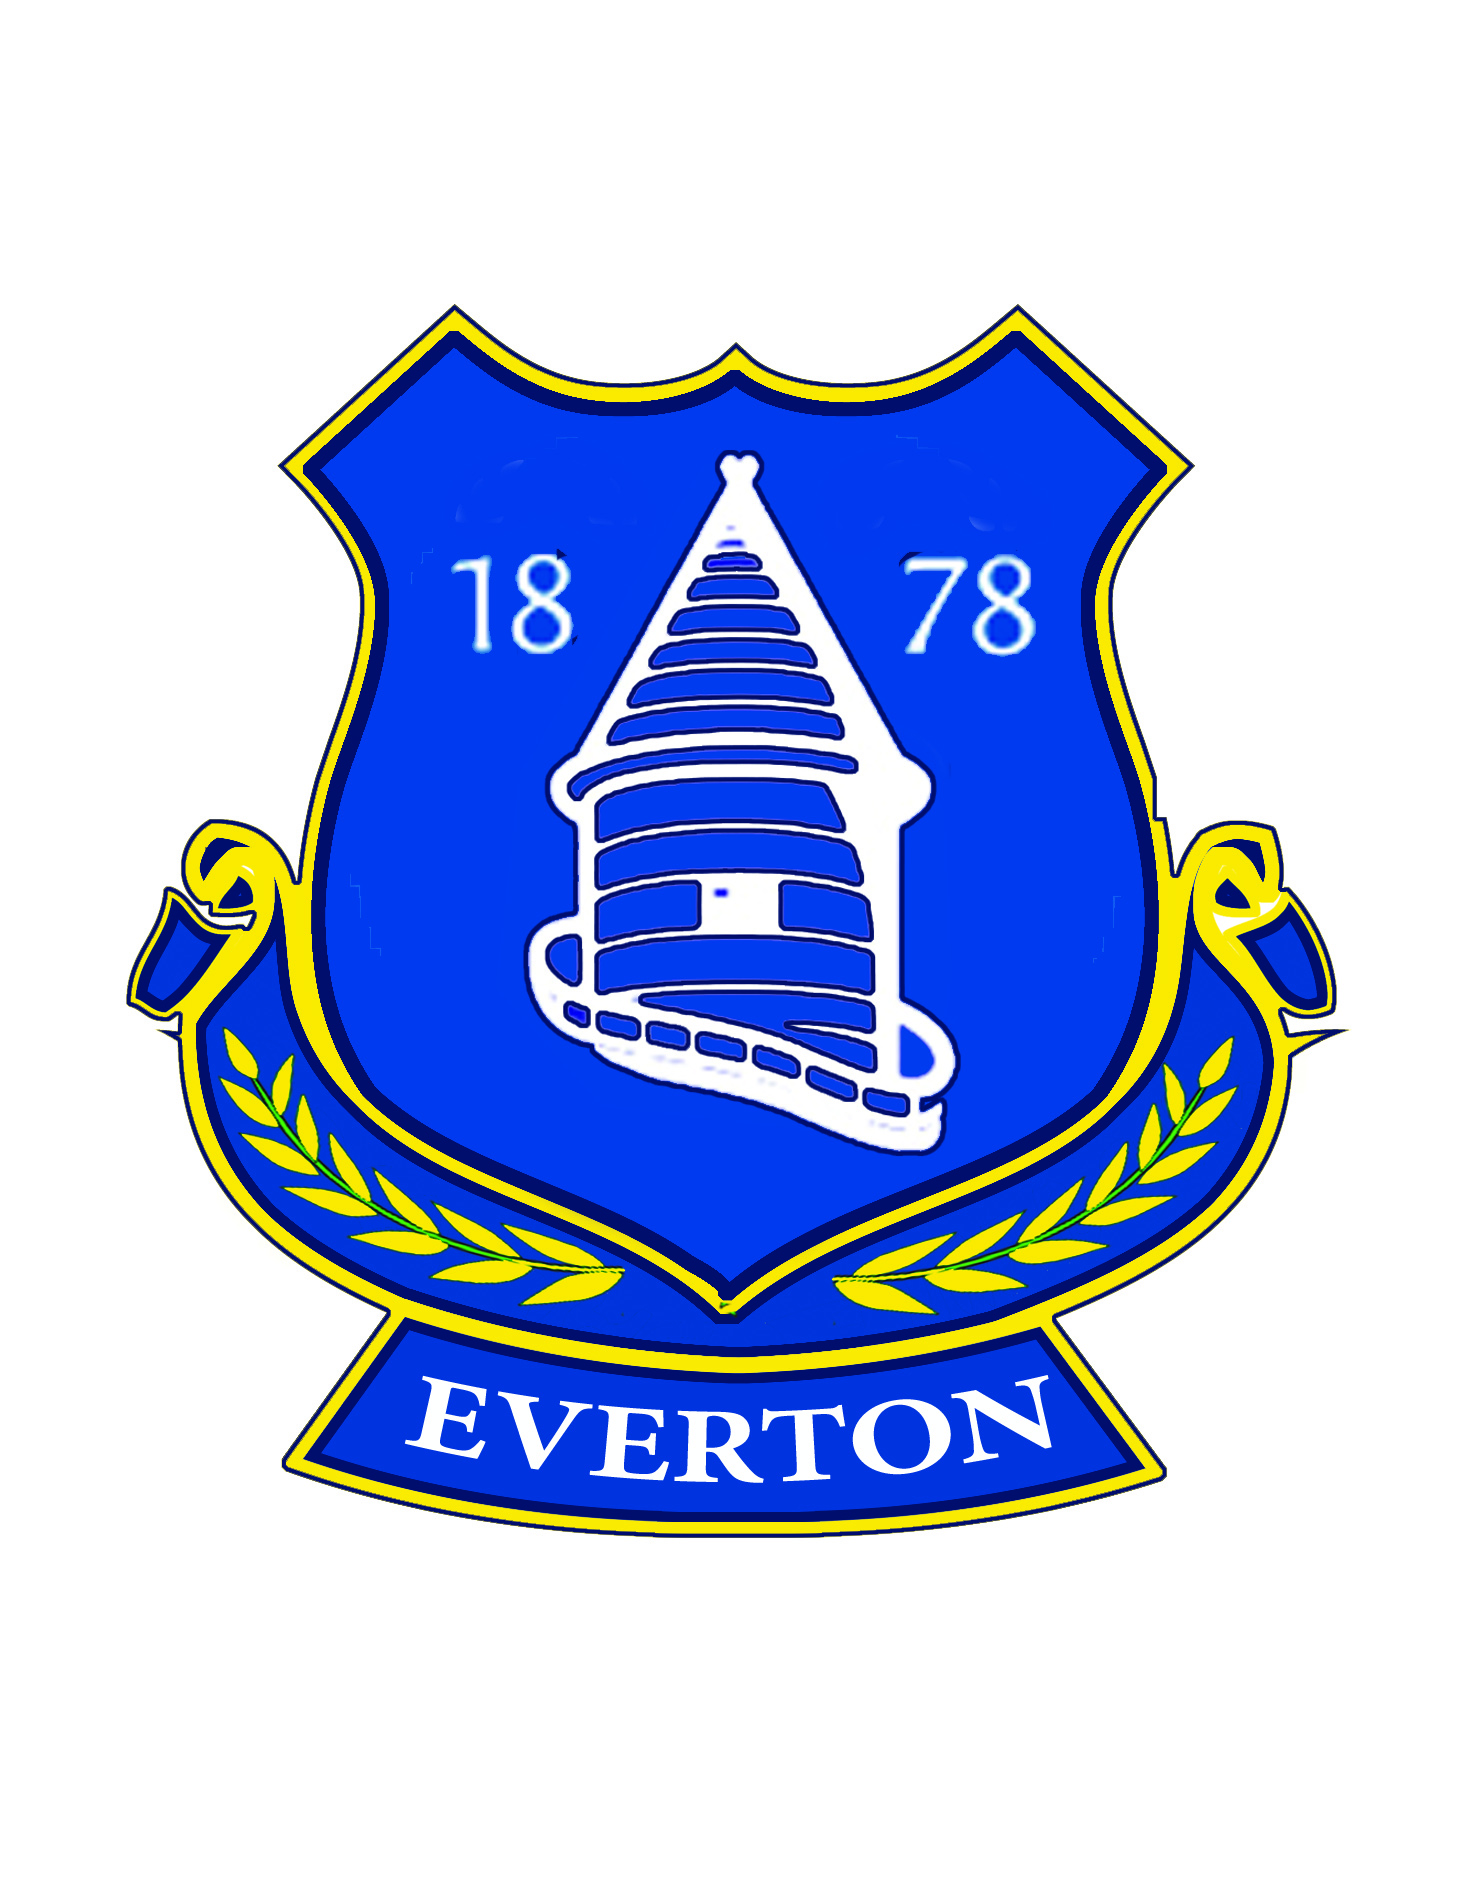 Everton_FC_crest.jpg